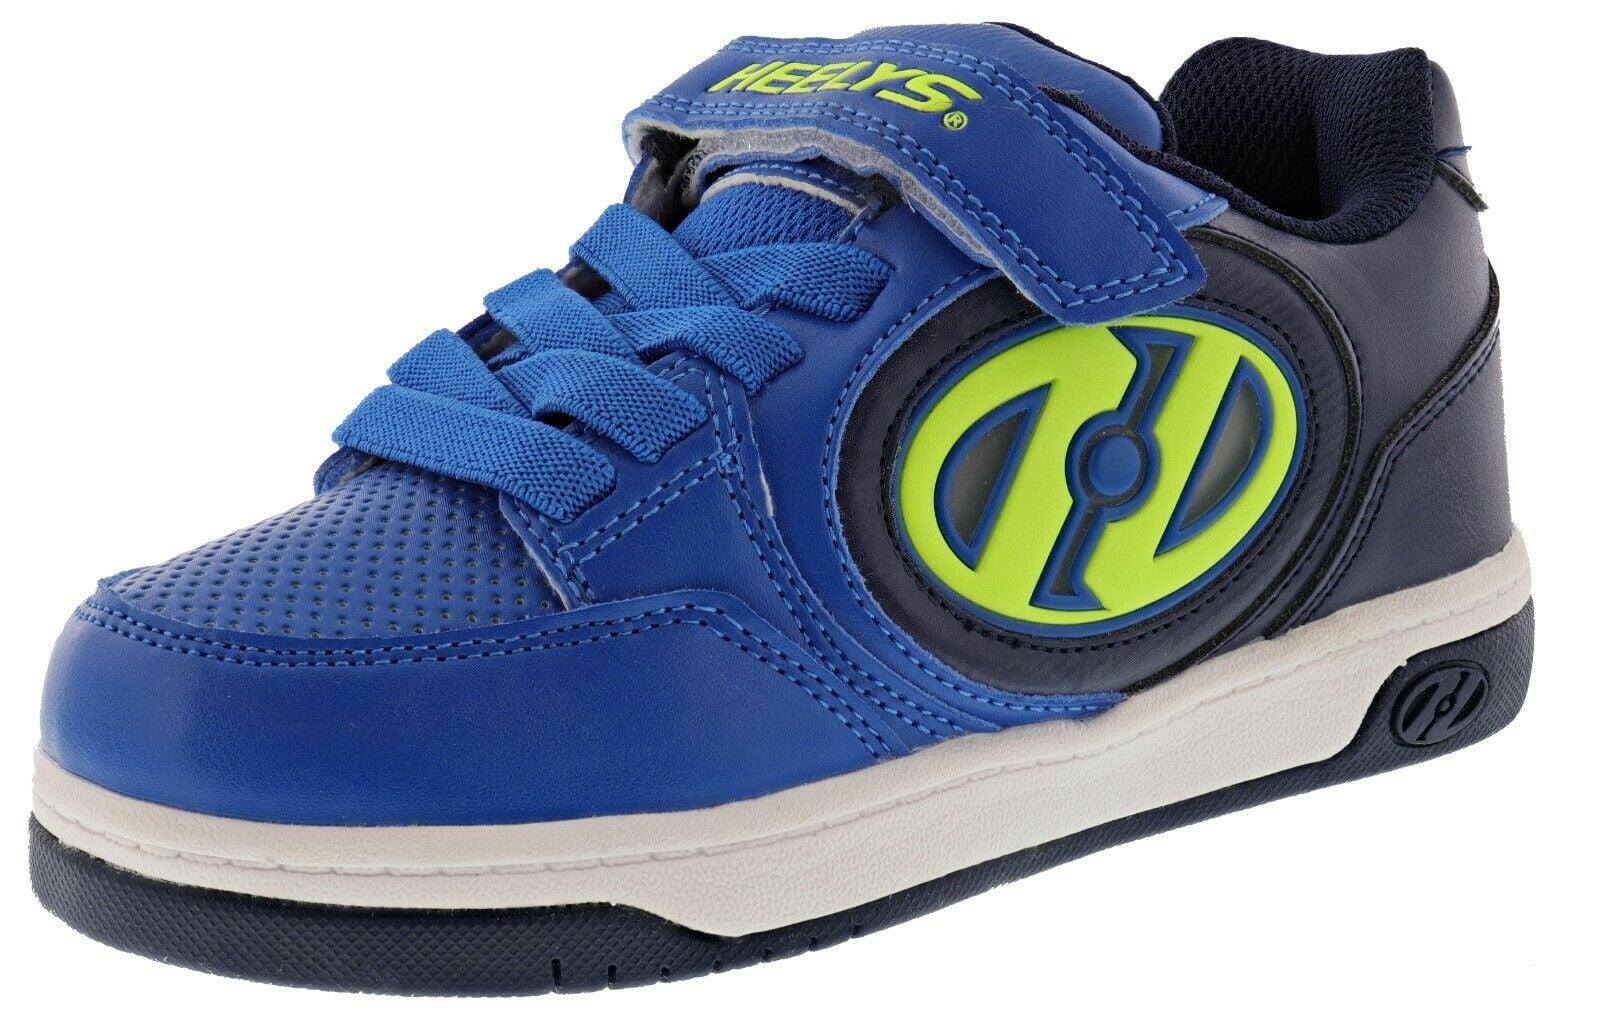 Heelys Kids Plus X2 Lighted Tennis Shoe